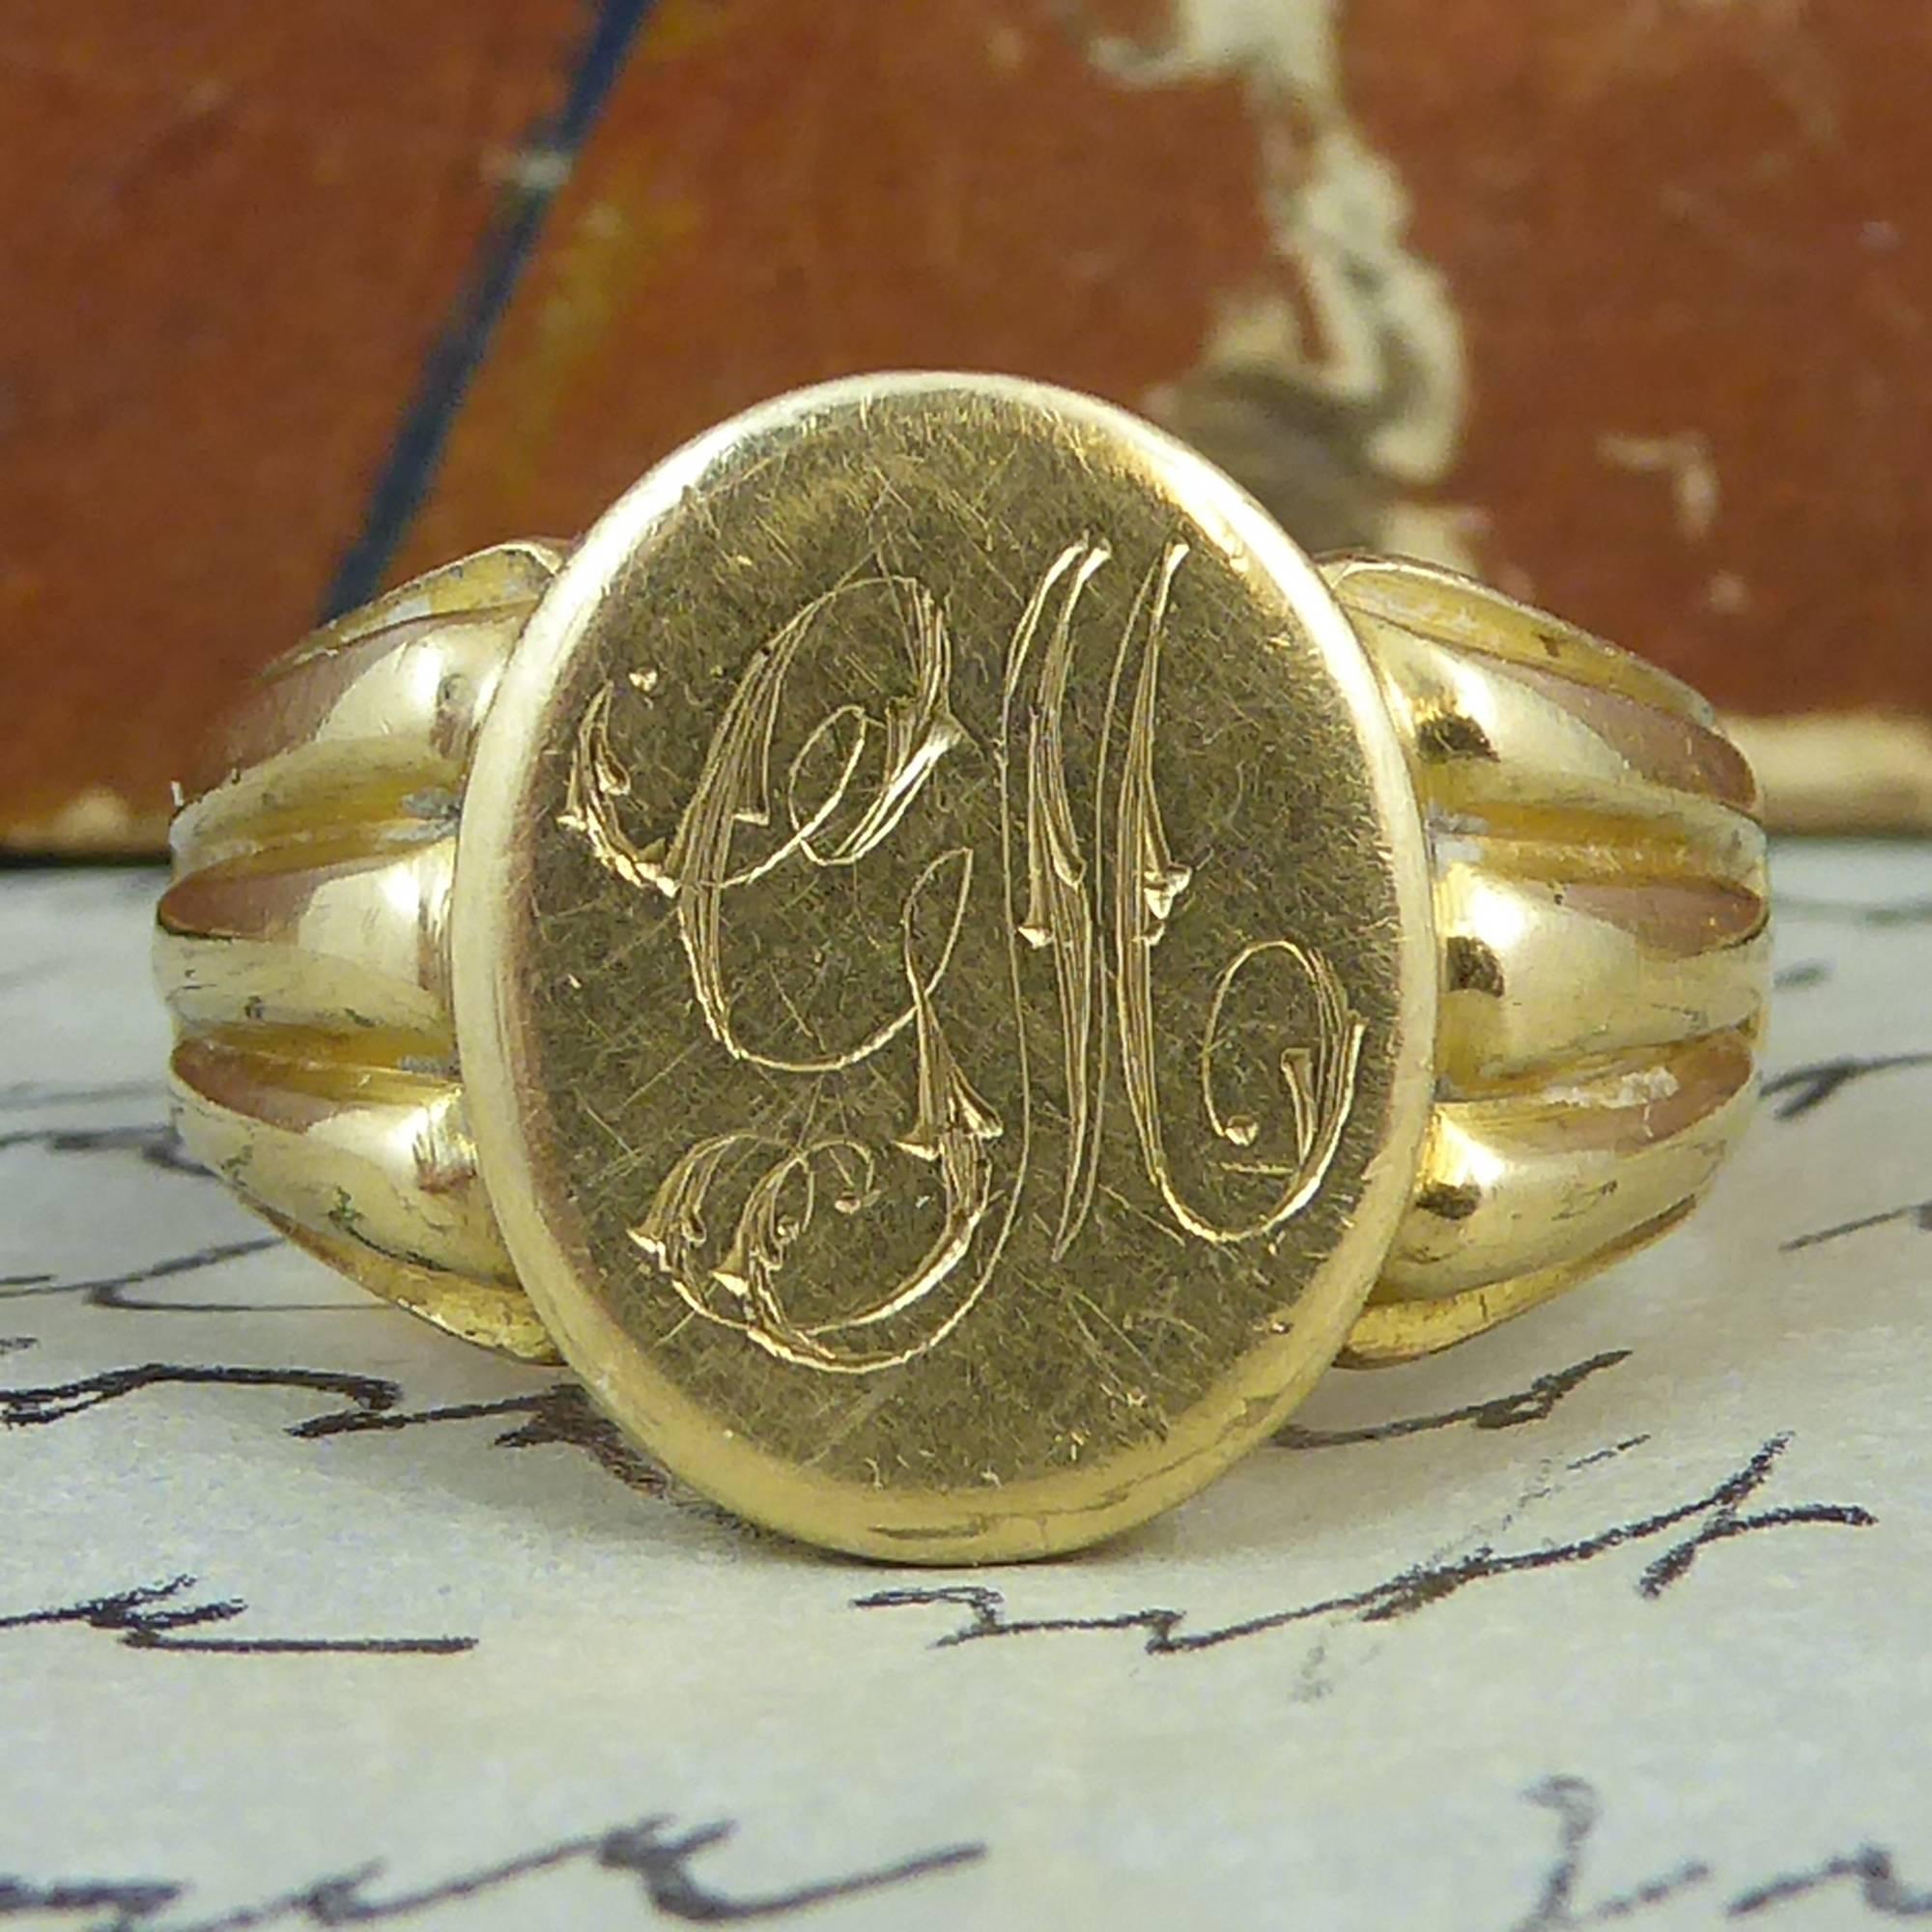 Edwardian Antique Gold Gents Signet Ring, Hallmarked London 1911, 18 Carat Gold 2